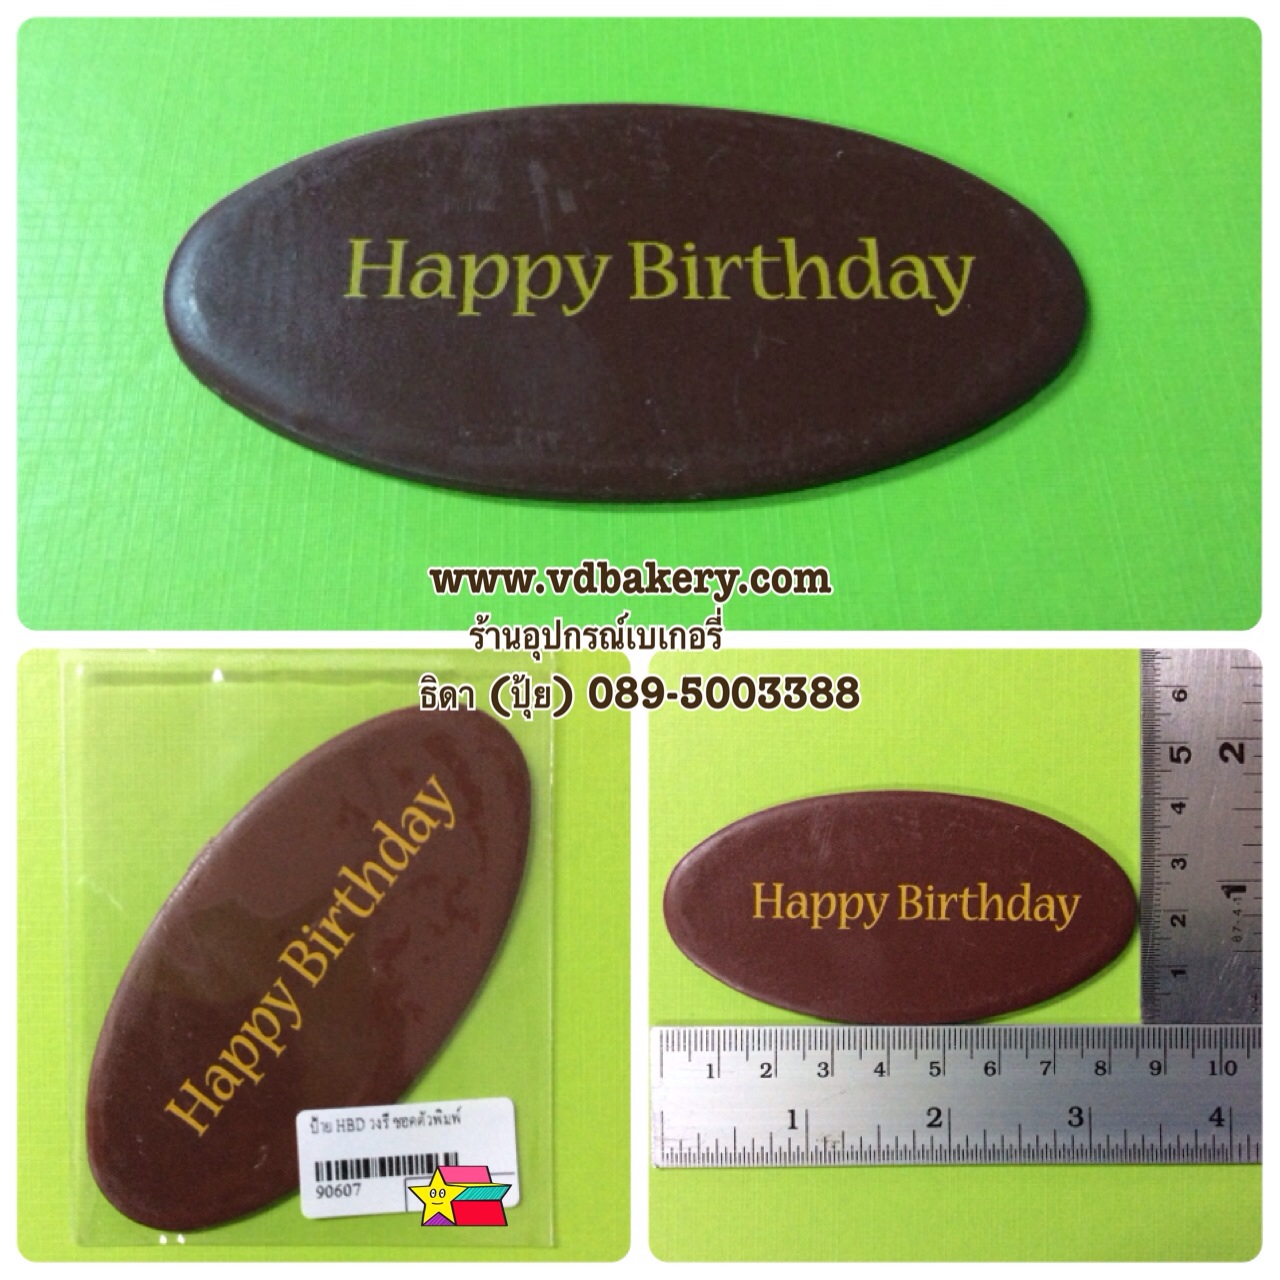 (0209BR) ป้าย Happy Birth Day วงรี ตัวเขียน สีช็อคโกแลต